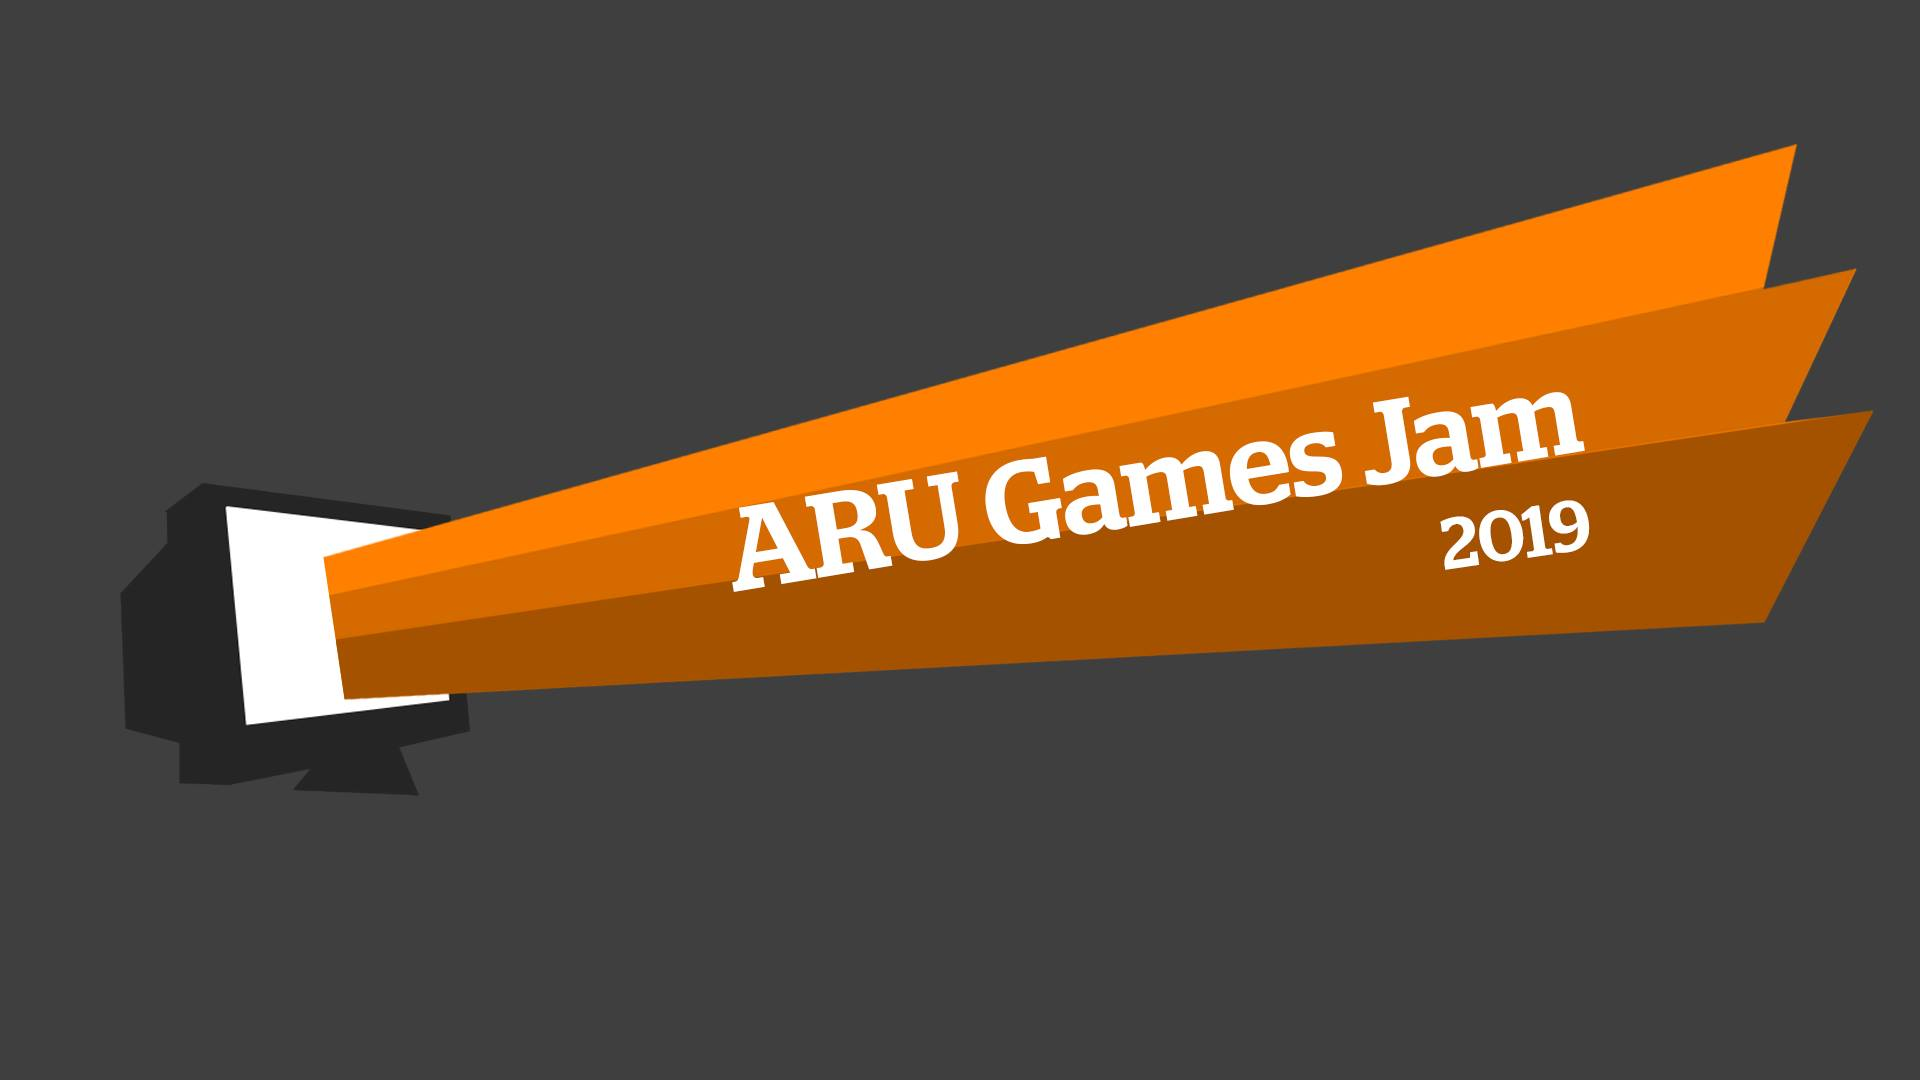 ARU Games Jam